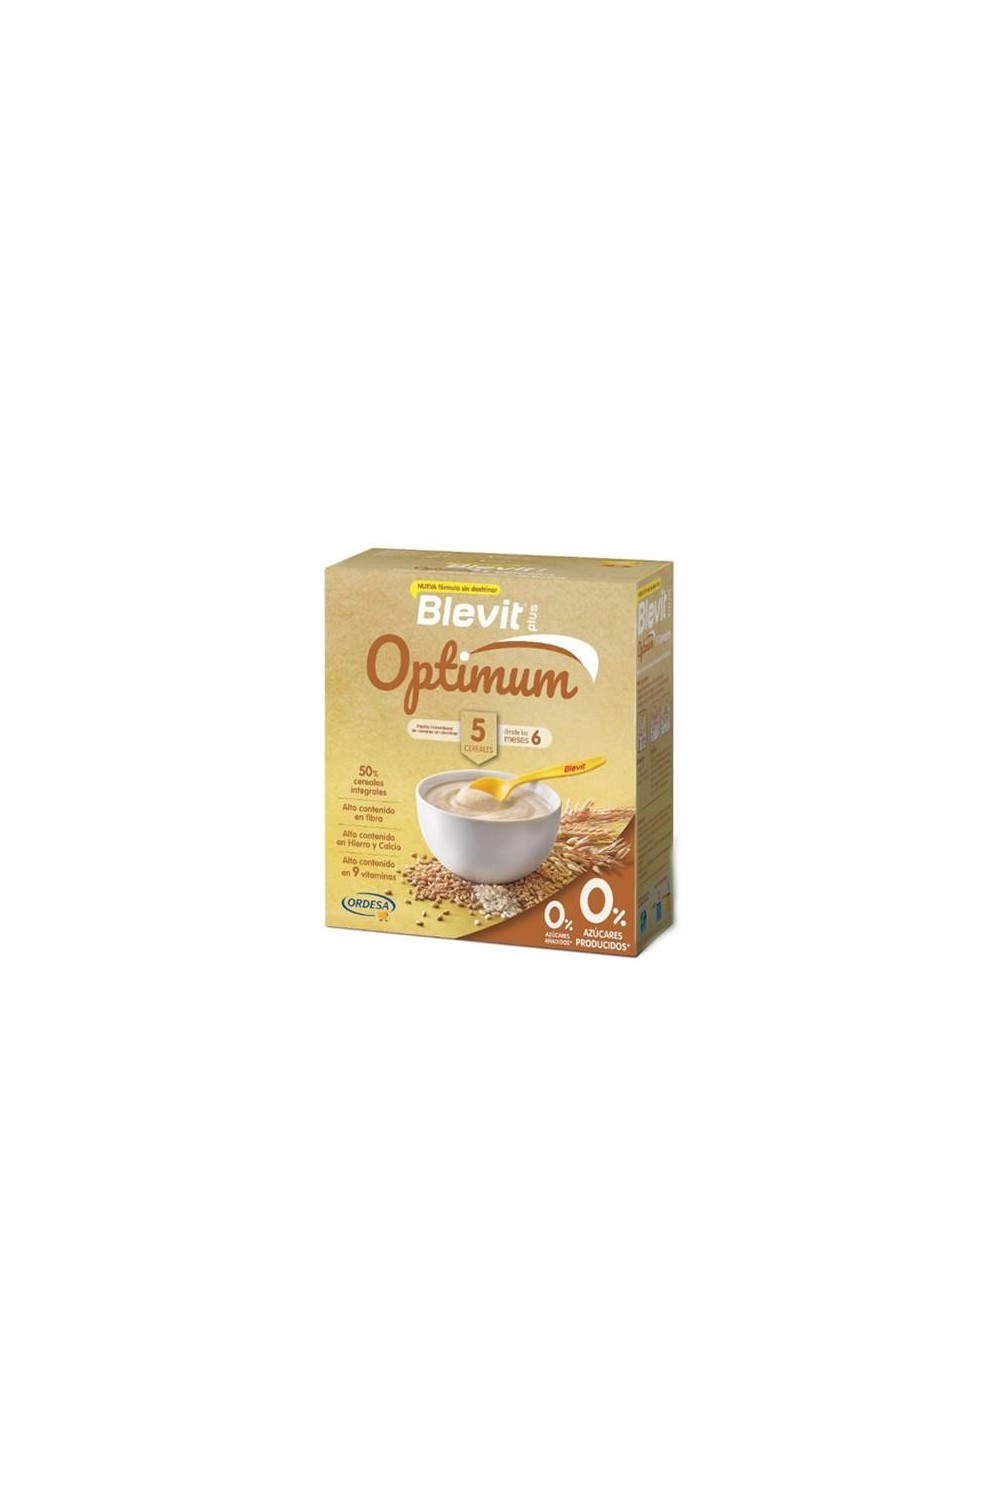 ORDESA - Blevit Plus Optimun 5 Cereals 400g